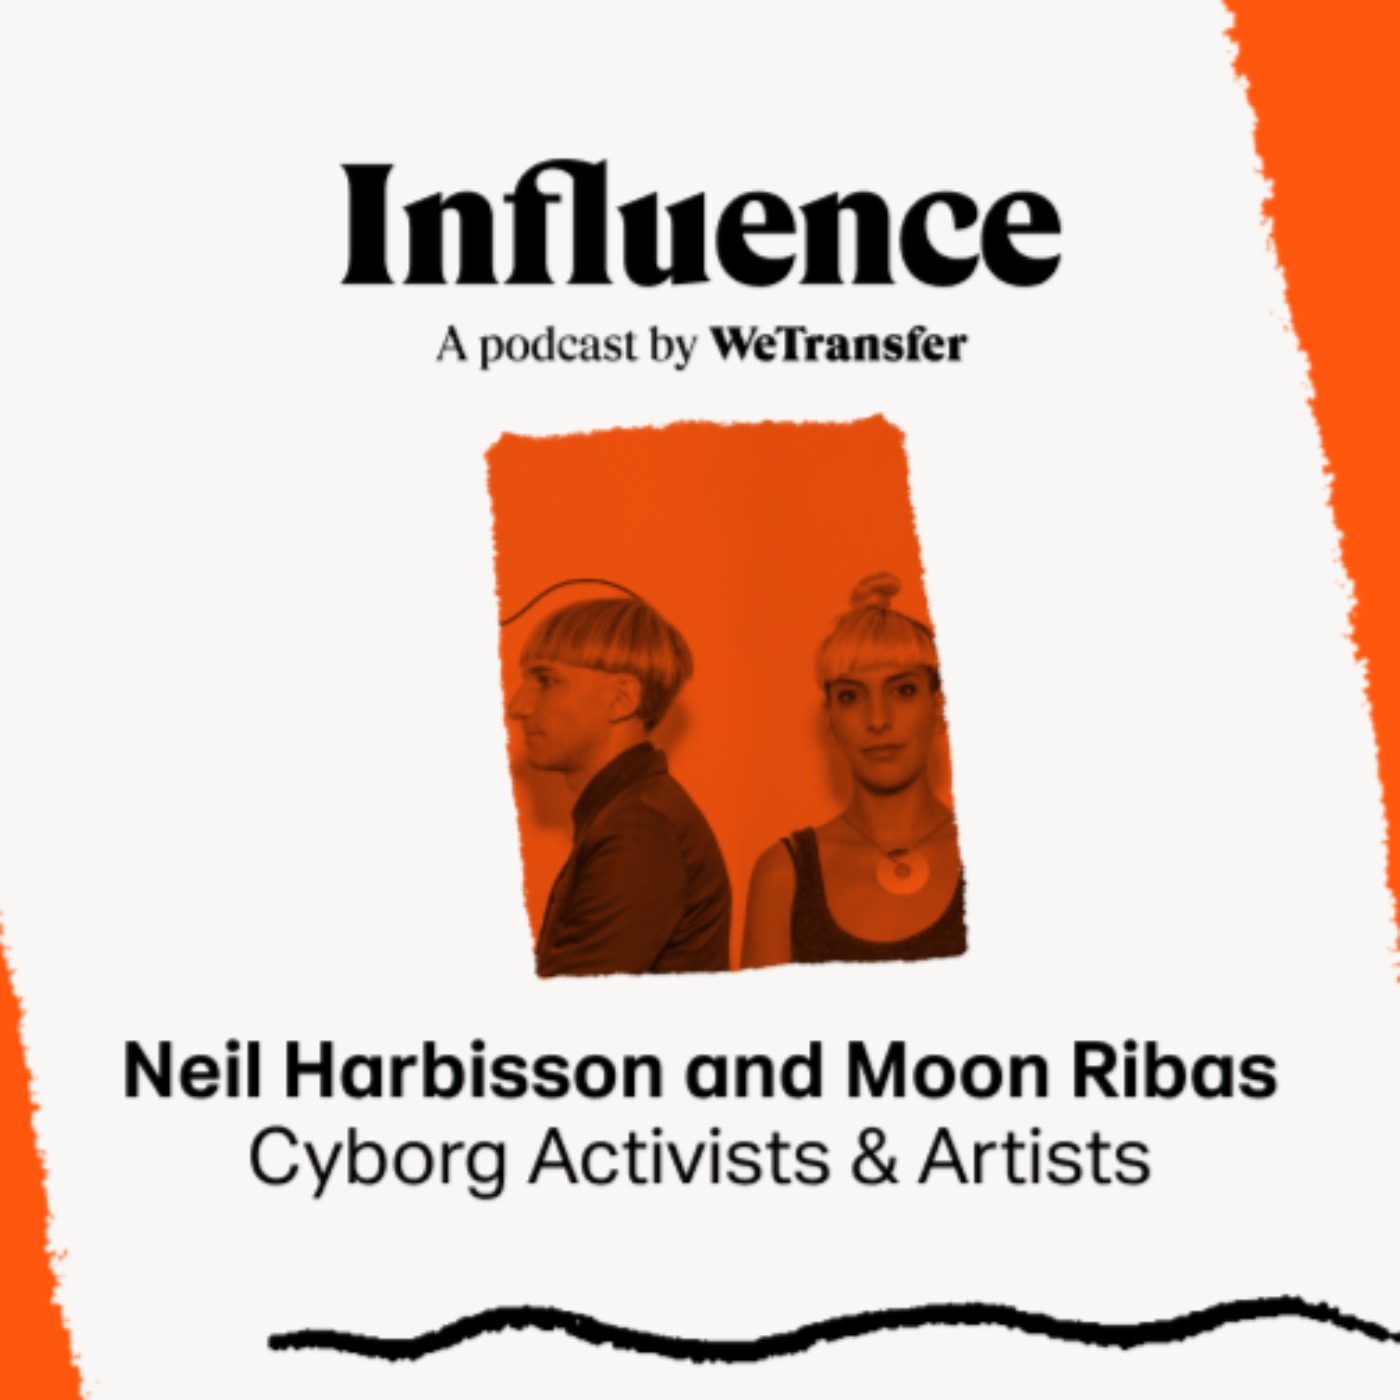 Moon Ribas and Neil Harbisson on Life as Cyborgs